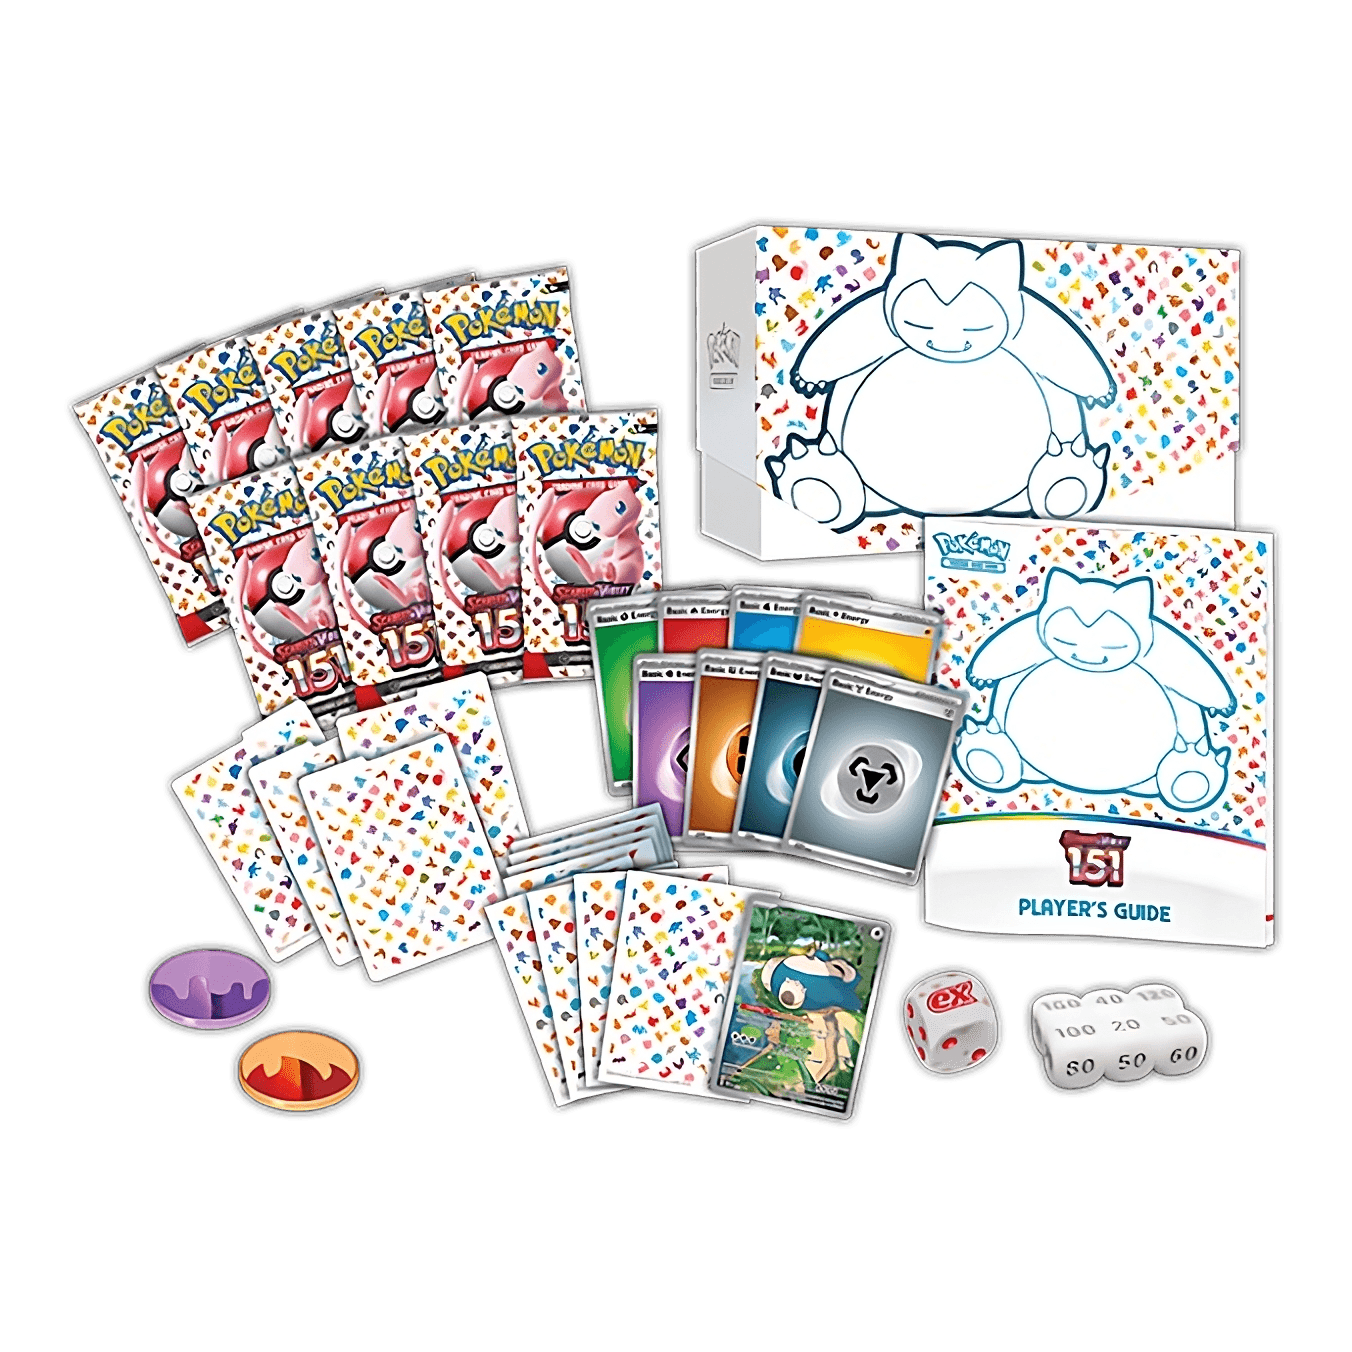 Pokemon TCG - Scarlet & Violet - 151 Elite Trainer Box - The Card Vault